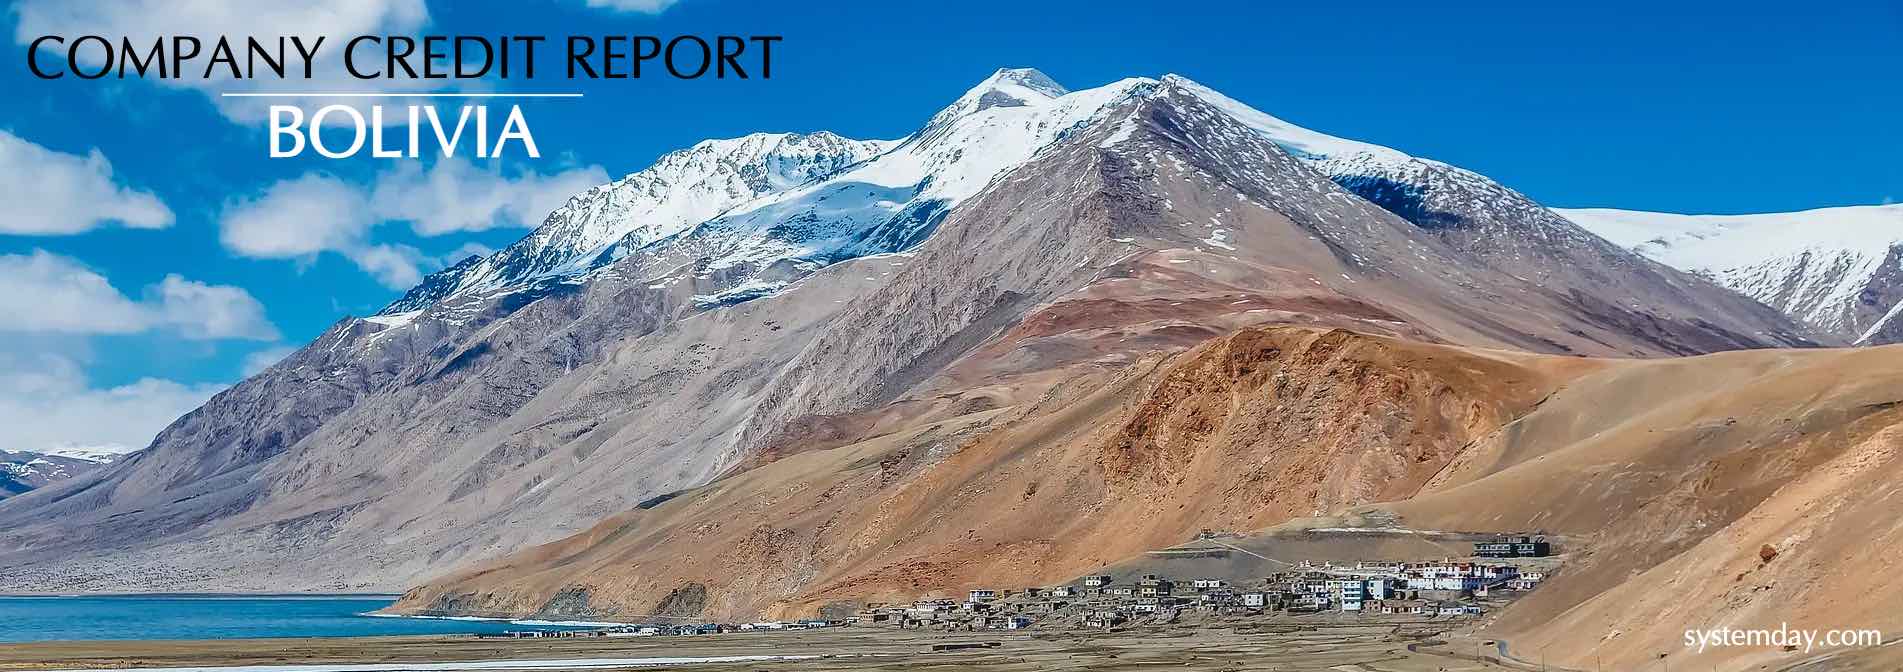 Bolivia Company Credit Report